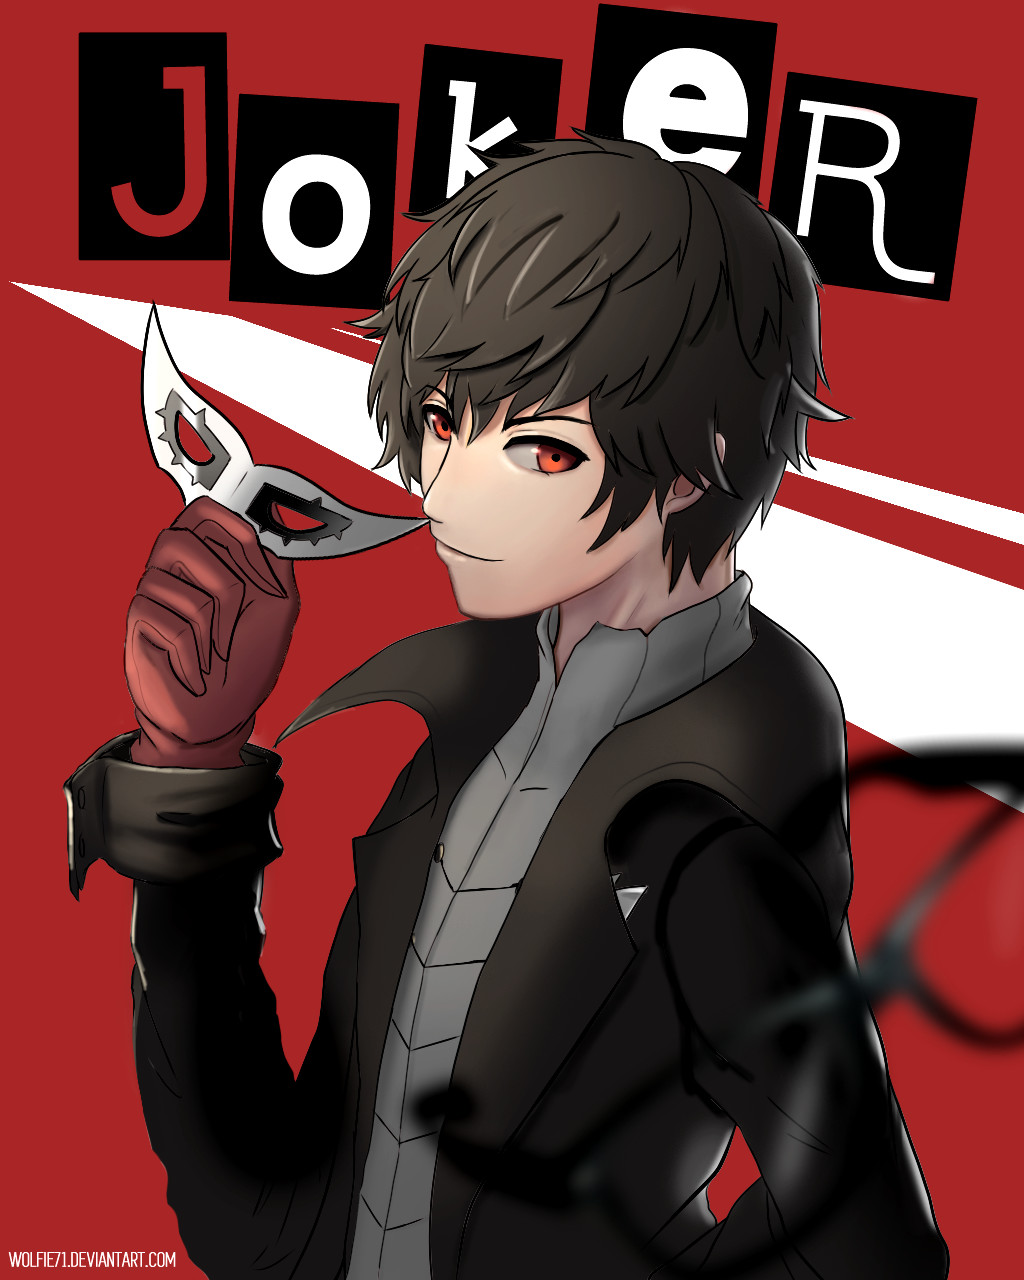 ArtStation - Joker Persona 5 fanart